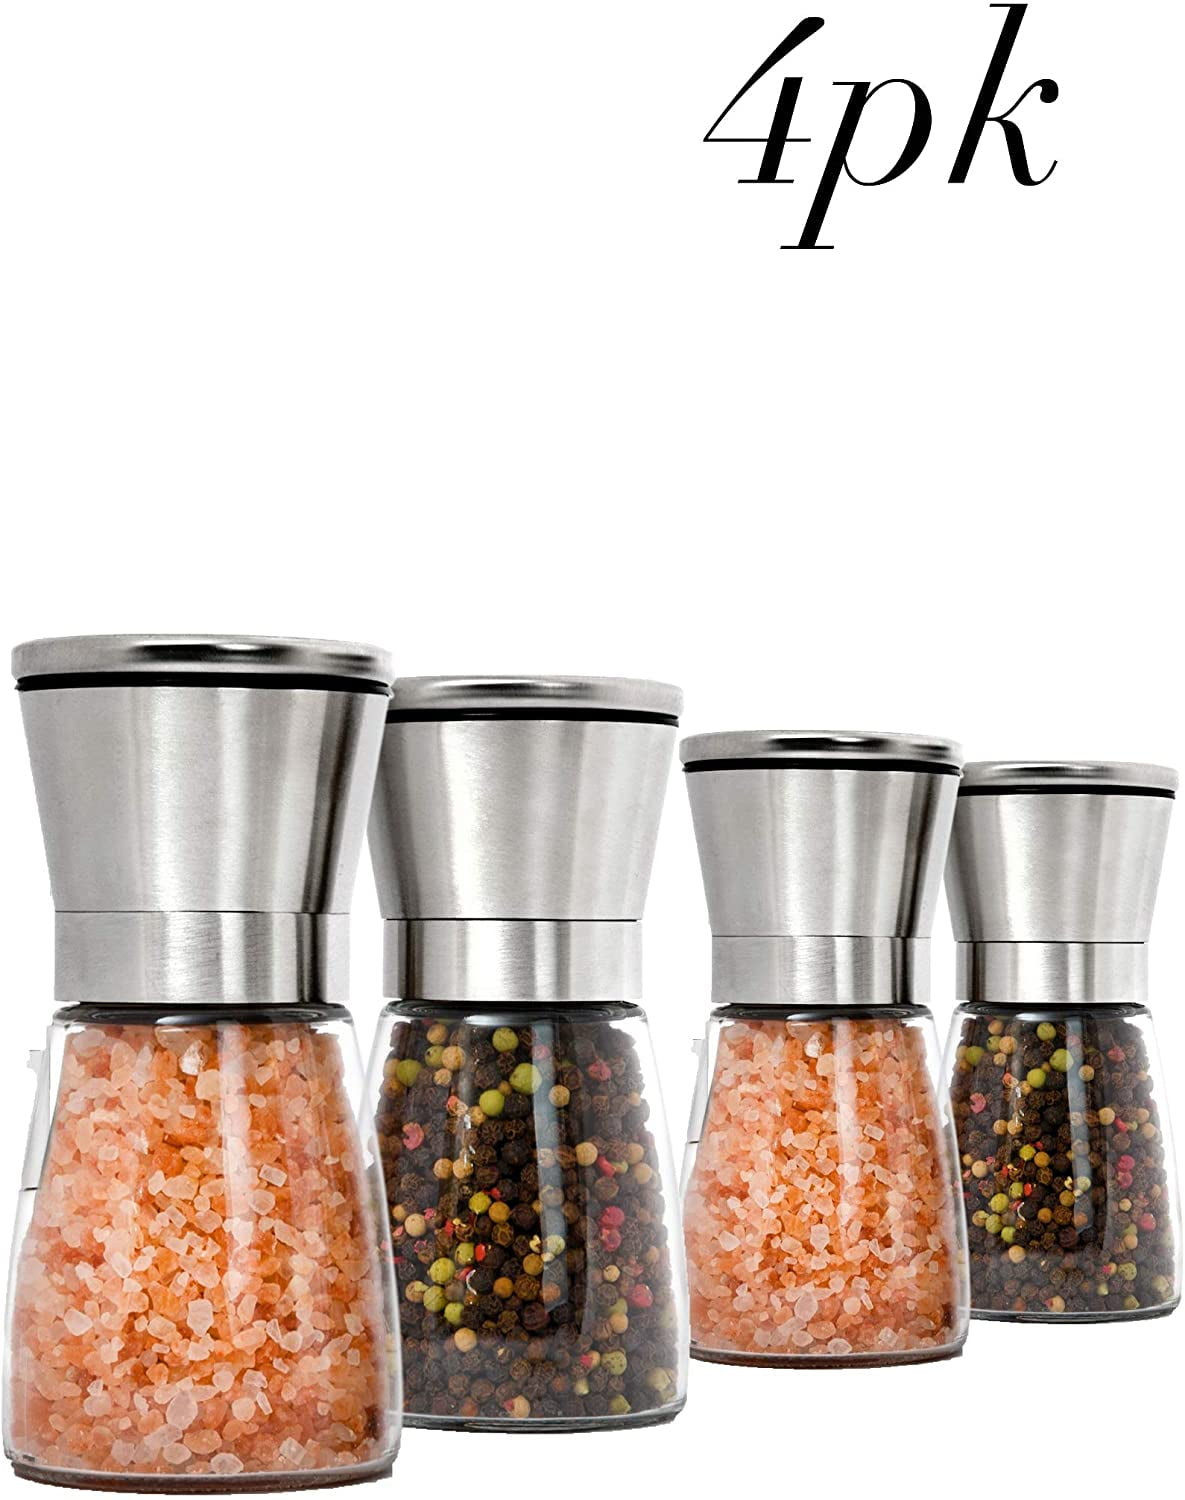 Home EC Salt and Pepper Grinder Set 2pk-Tall Gold Top